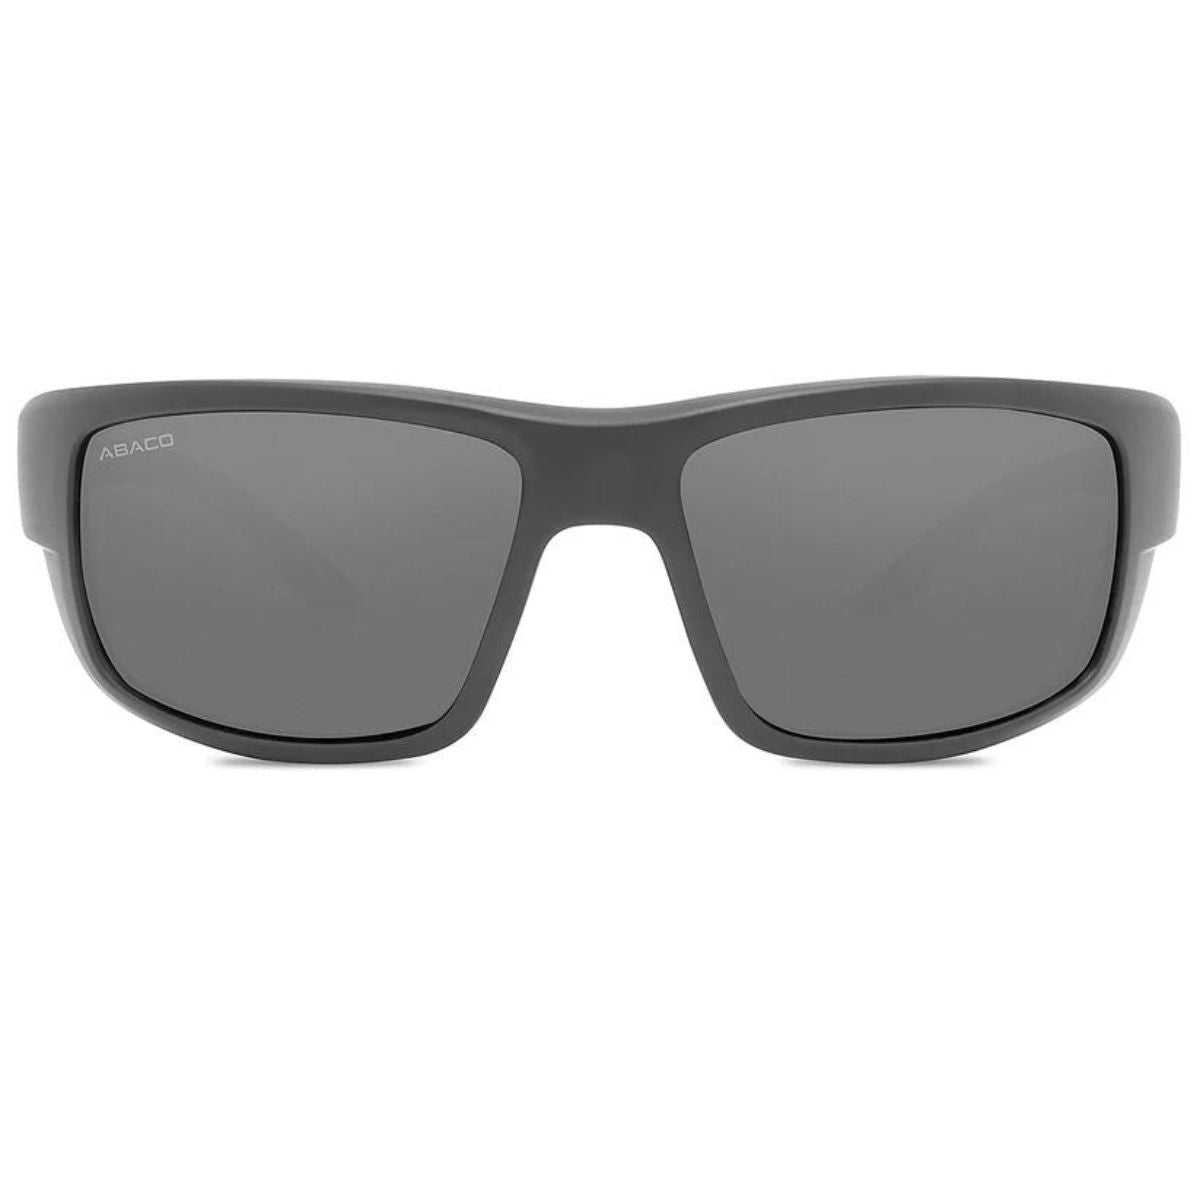 Abaco Edgewater Sunglasses in Matte Black Grey